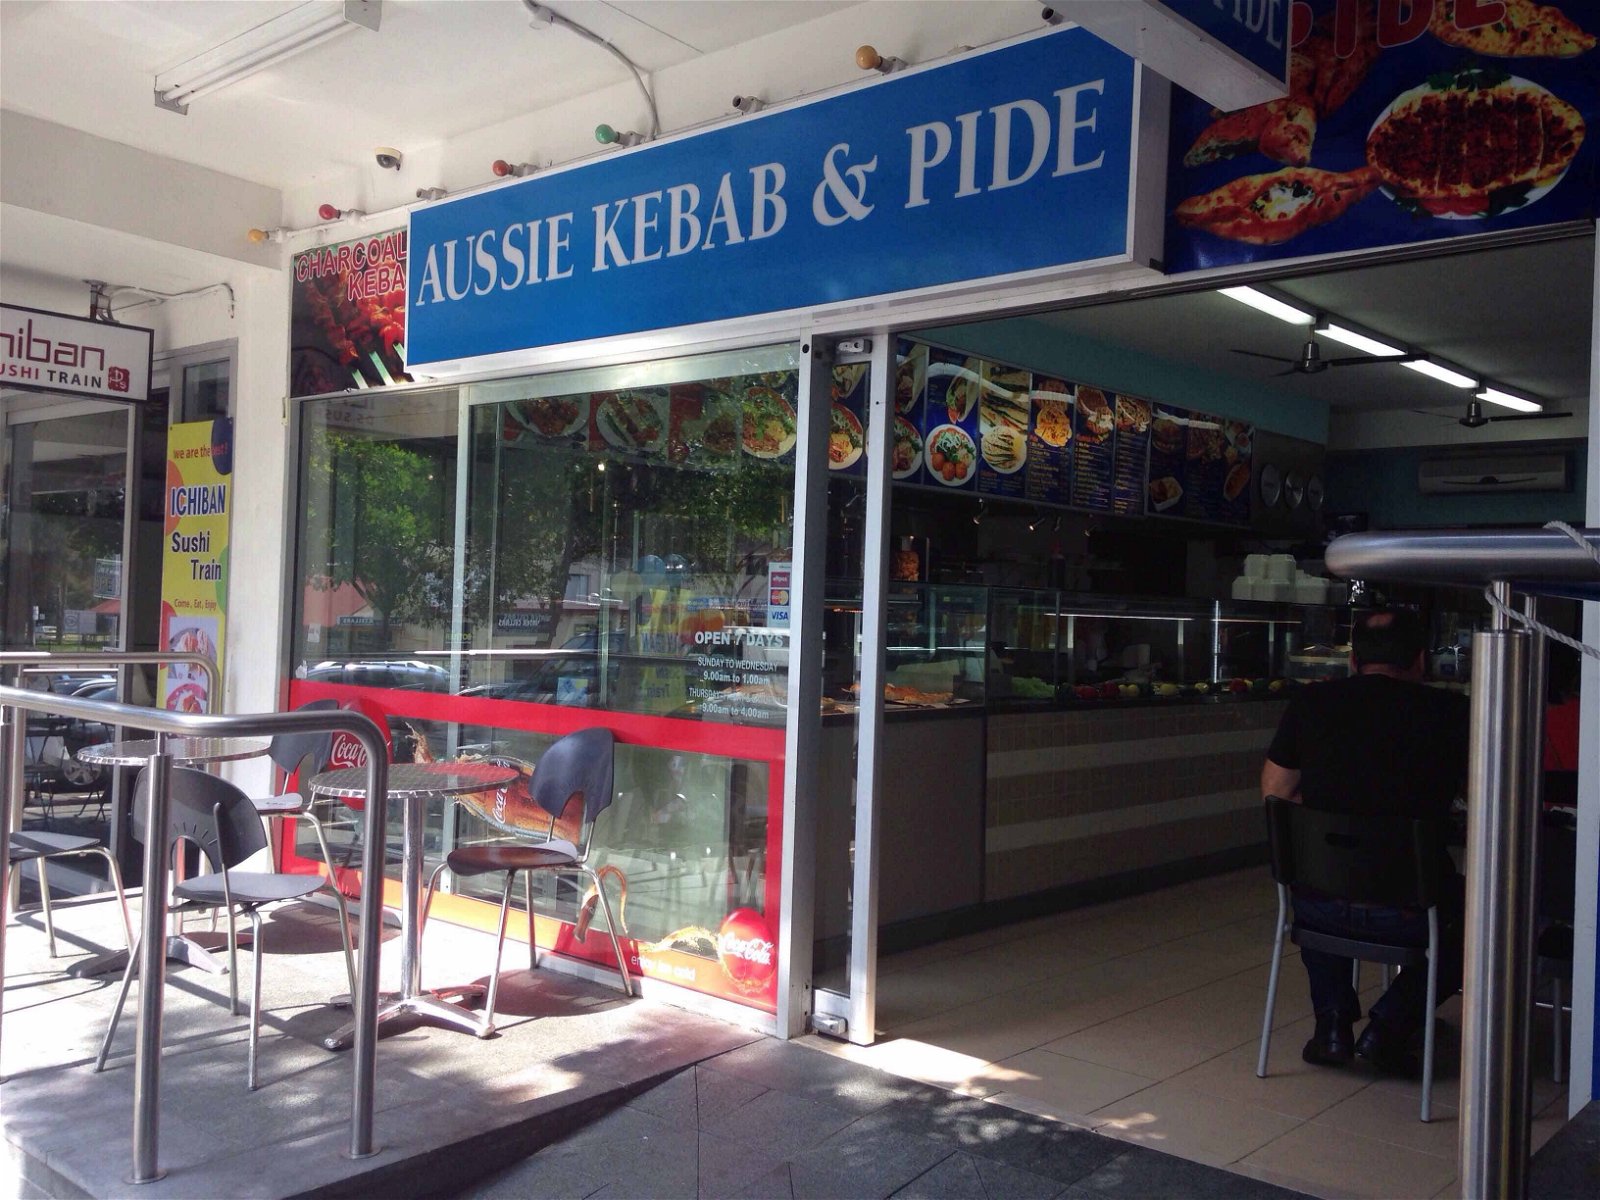 Aussie Kebab  Pide - Broome Tourism